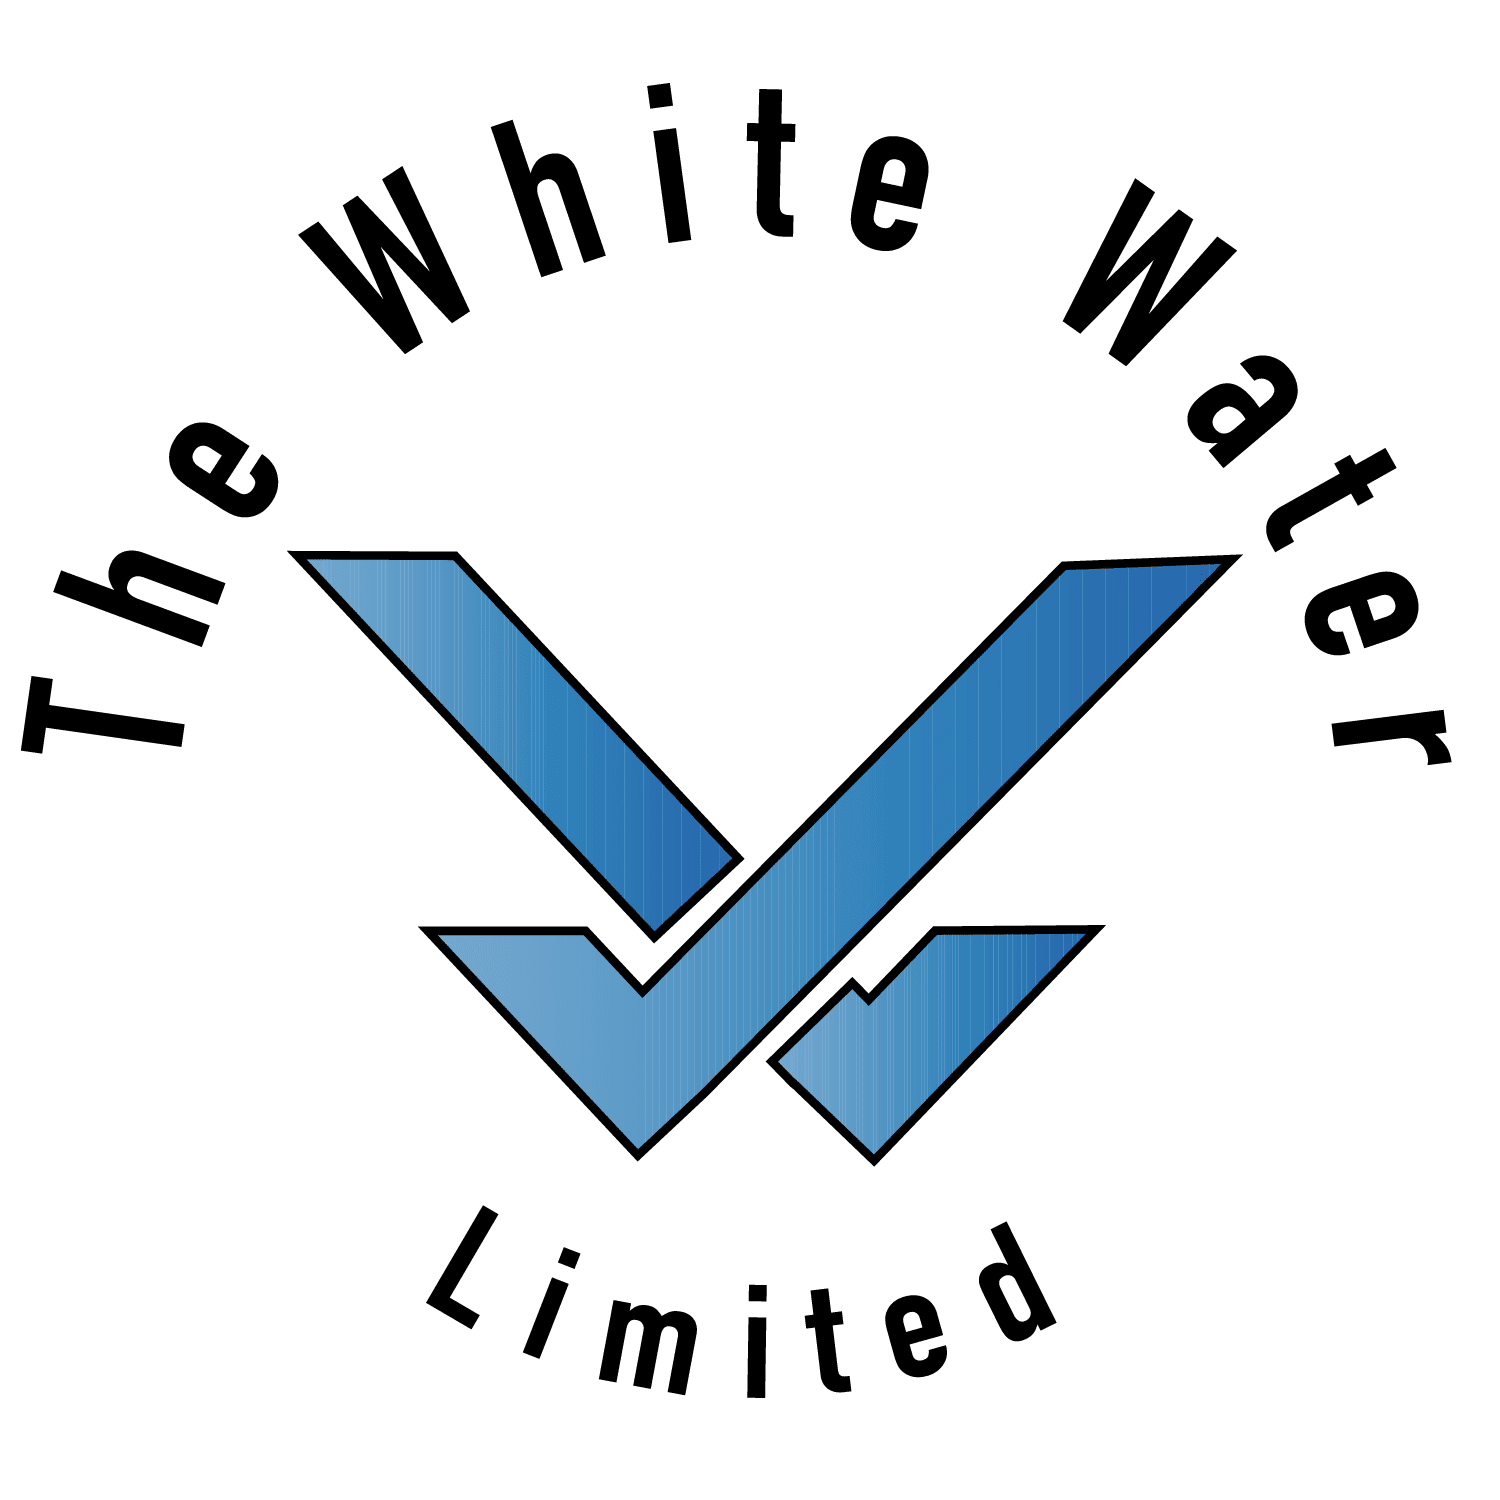 The White Water Ltd